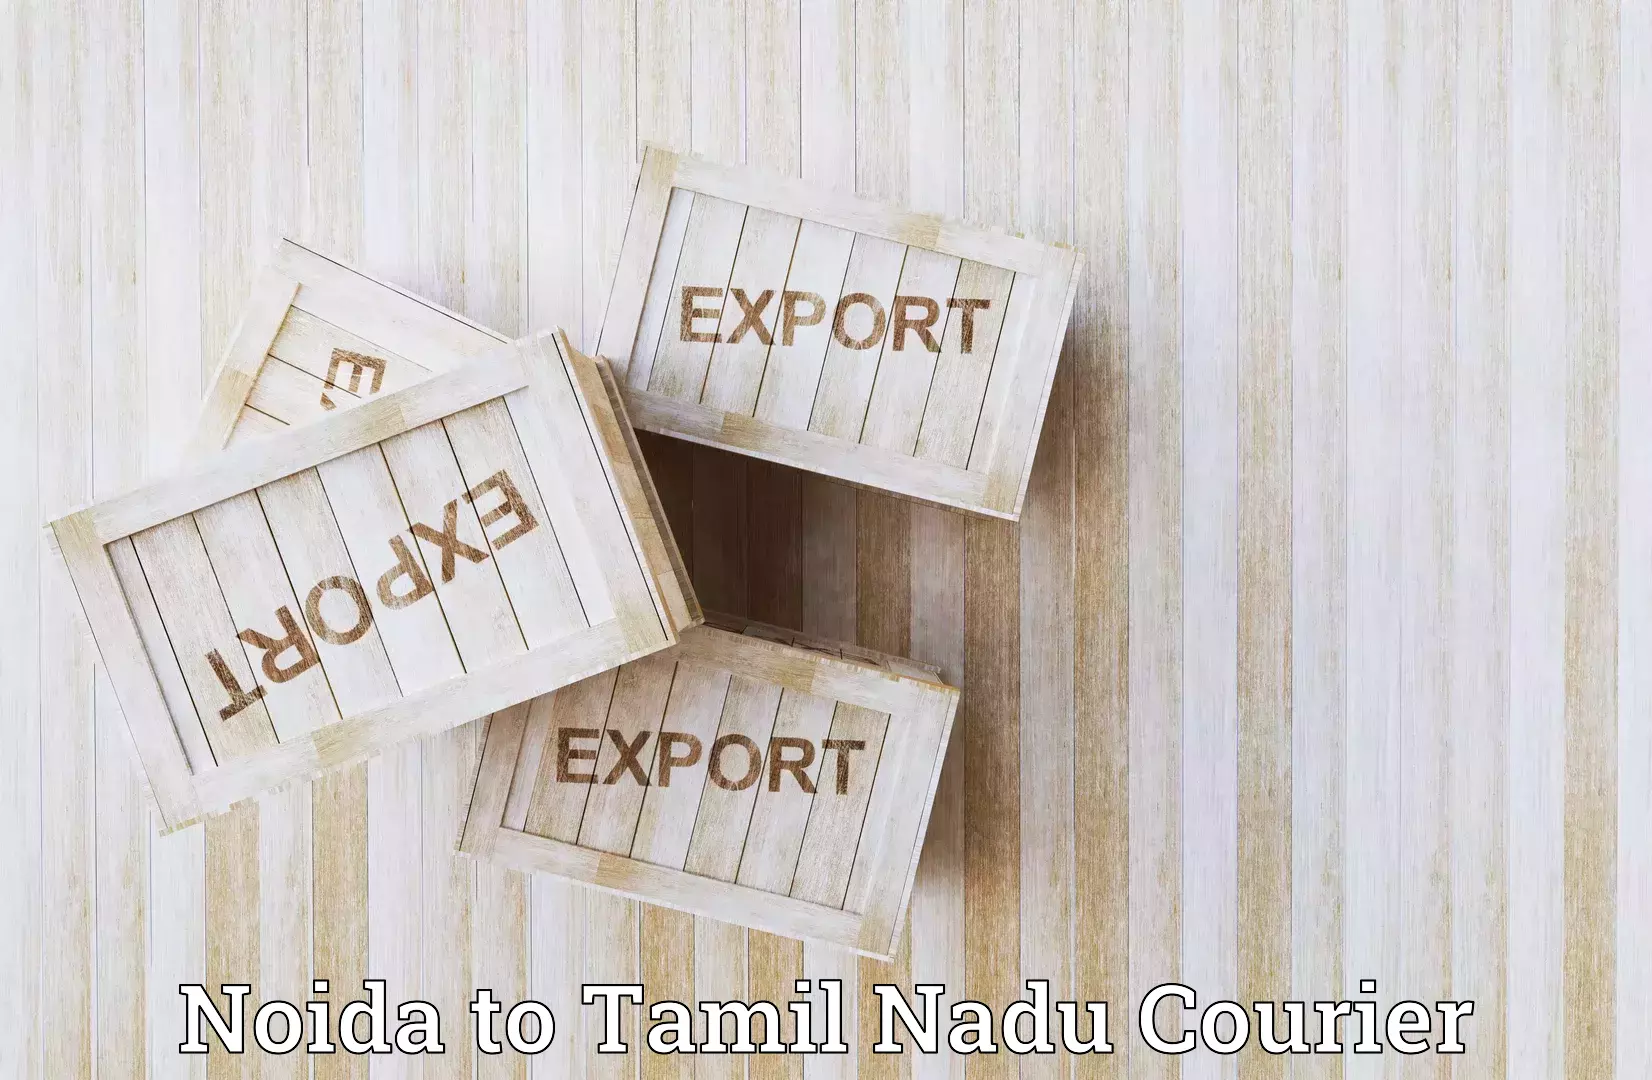 Global shipping networks Noida to Tamil Nadu